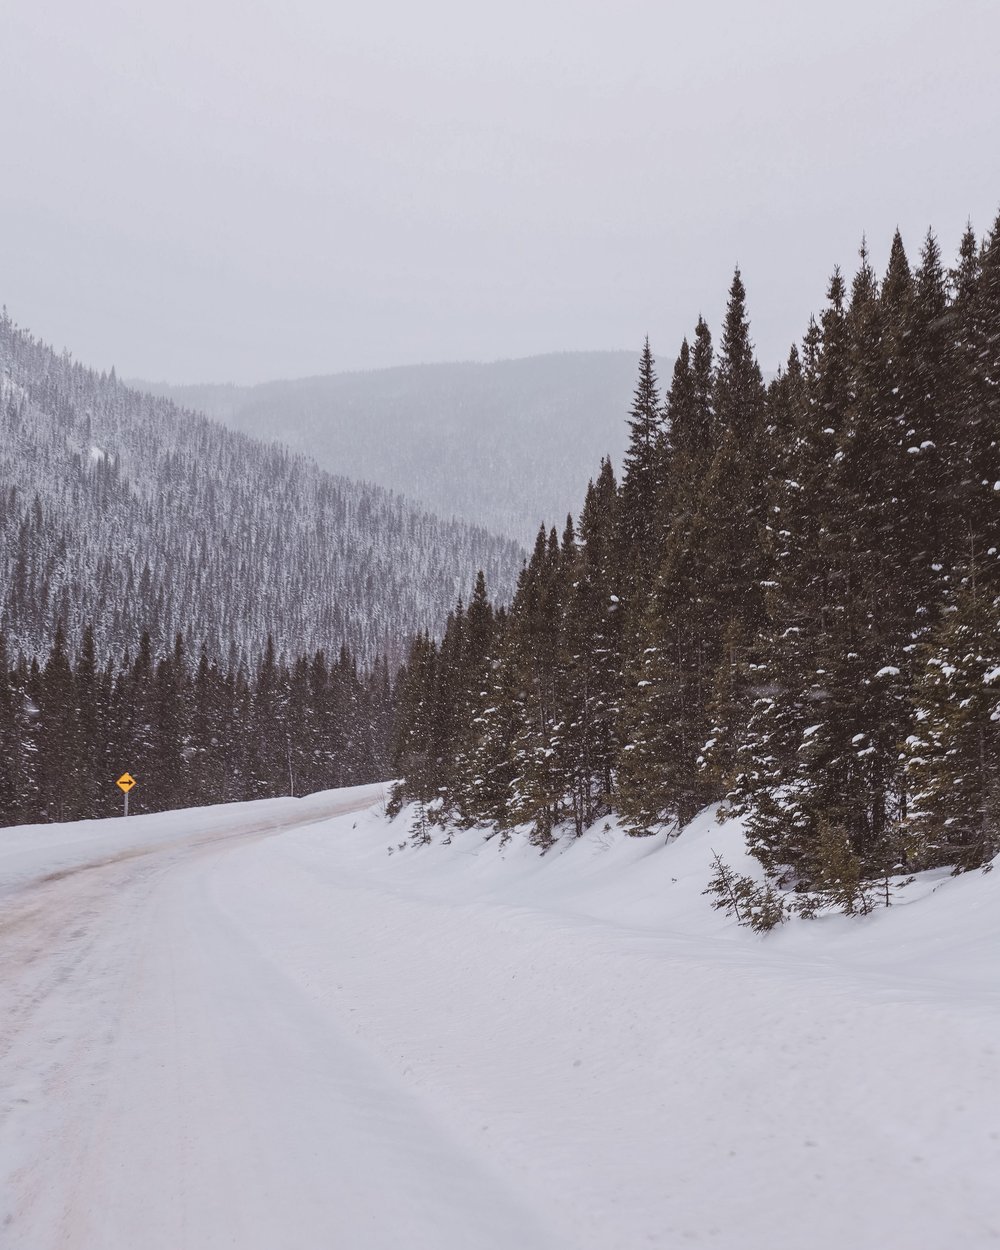 Snowstorm on the road - Laurentides Wildlife Reserve - Quebec - Canada